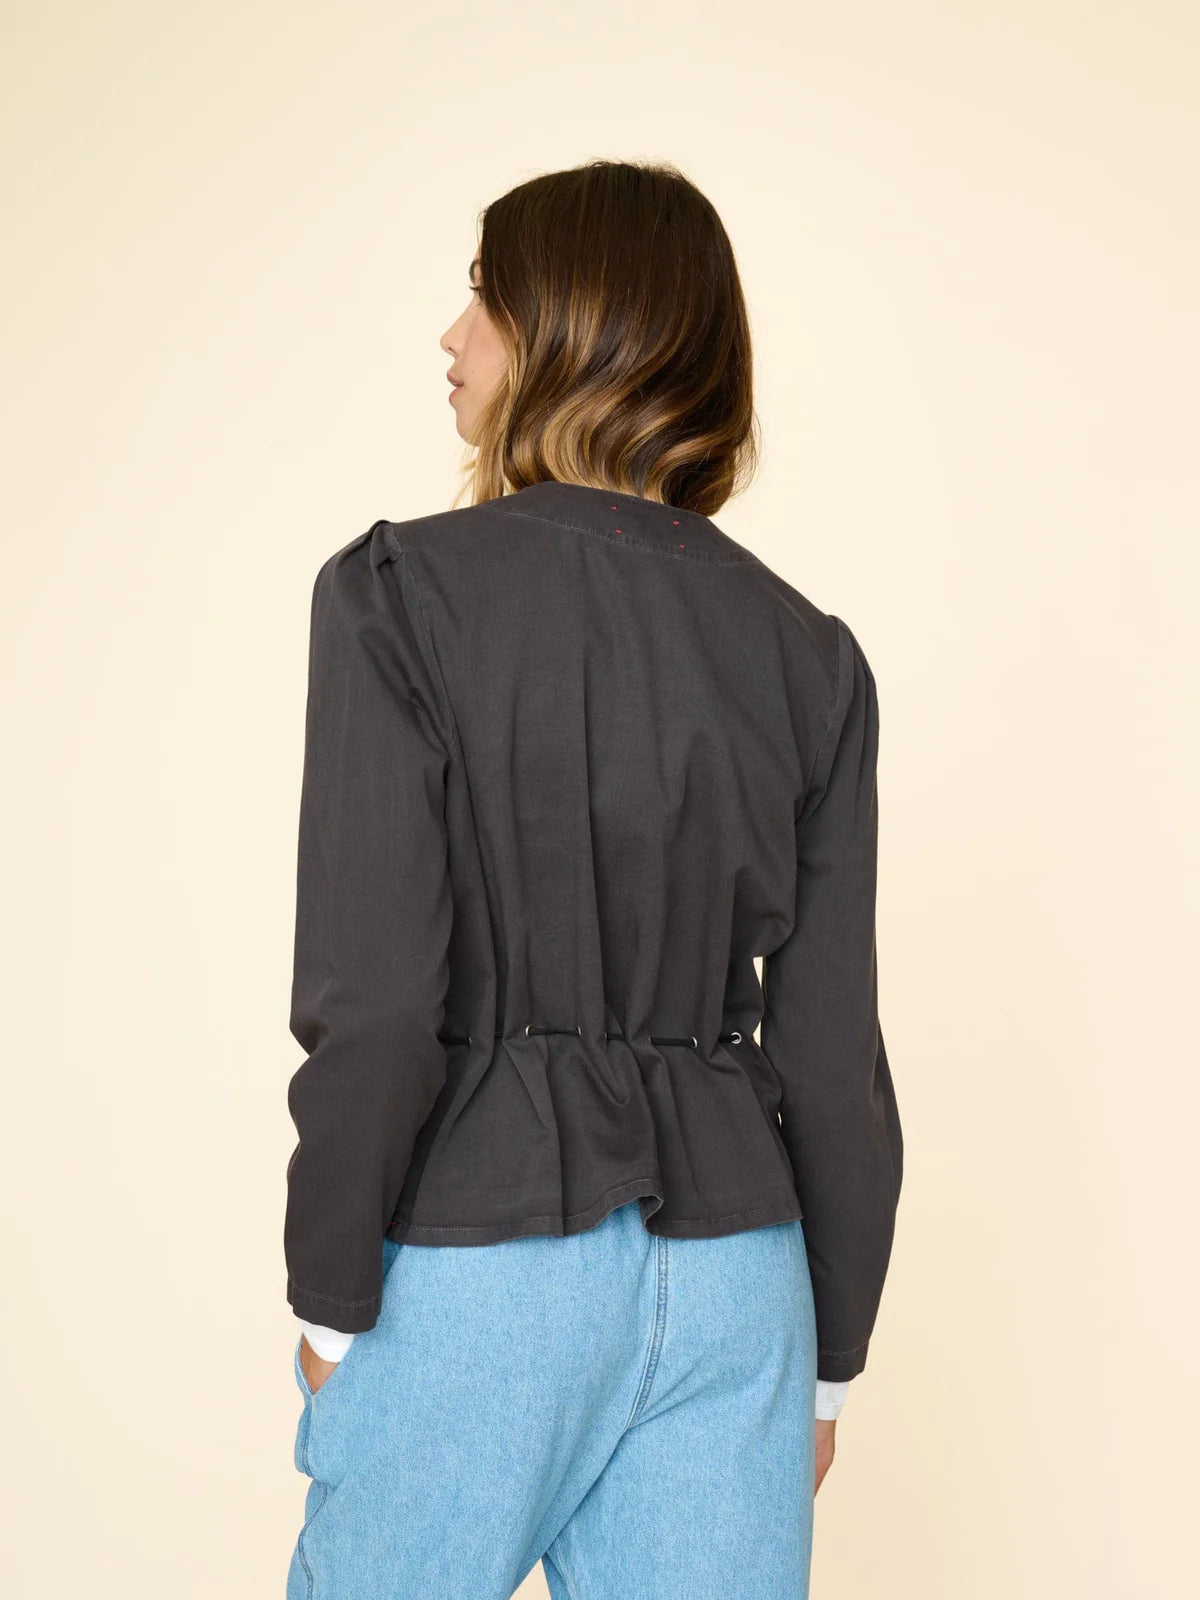 Vintage Black Sullivan Jacket by Xirena